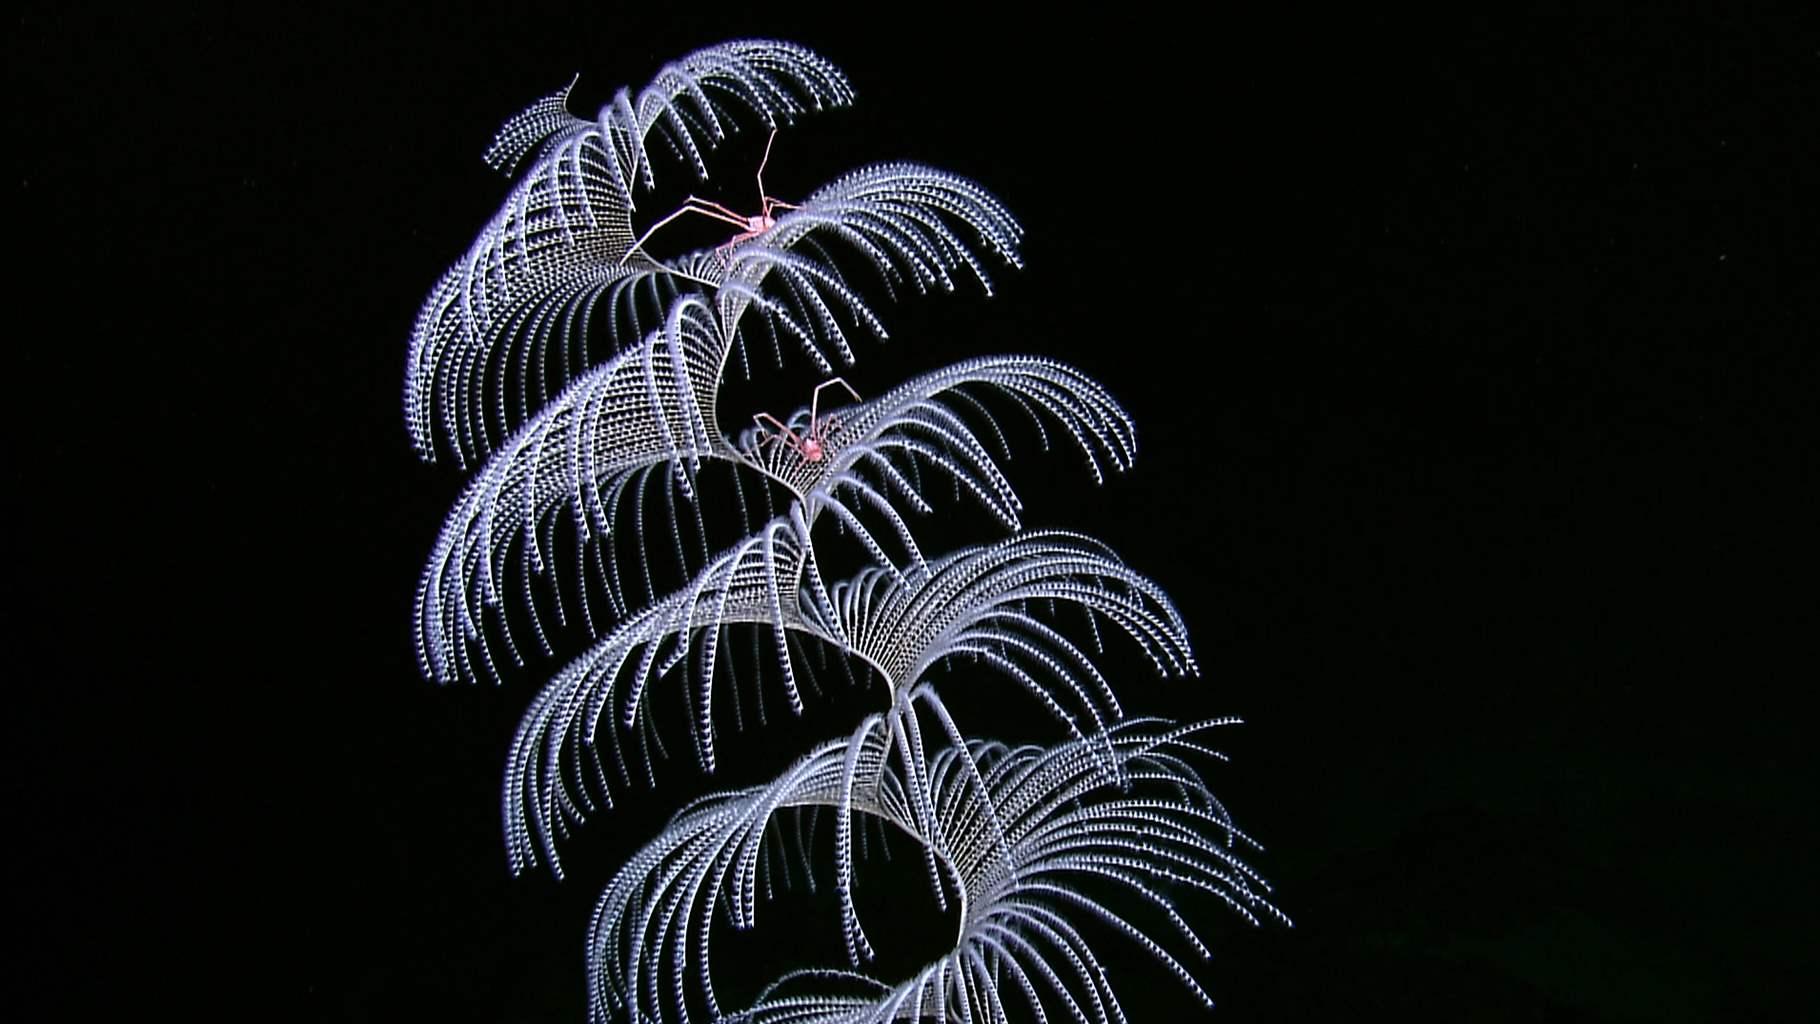 Iridogorgia coral